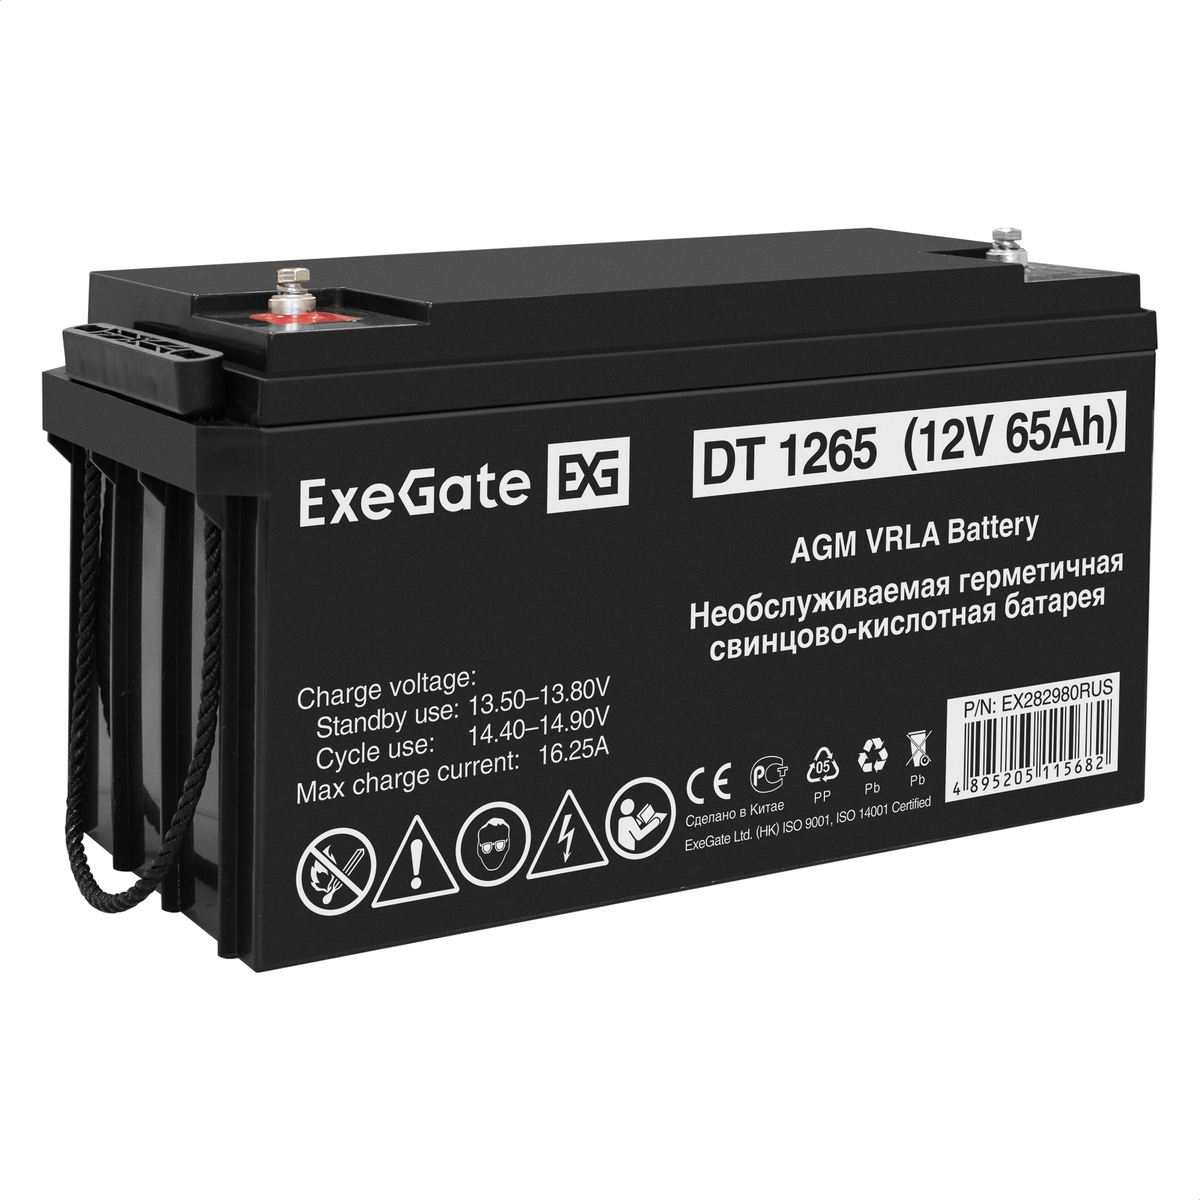 UPS set EX296001 + battery 65Ah EX282980 2 piece